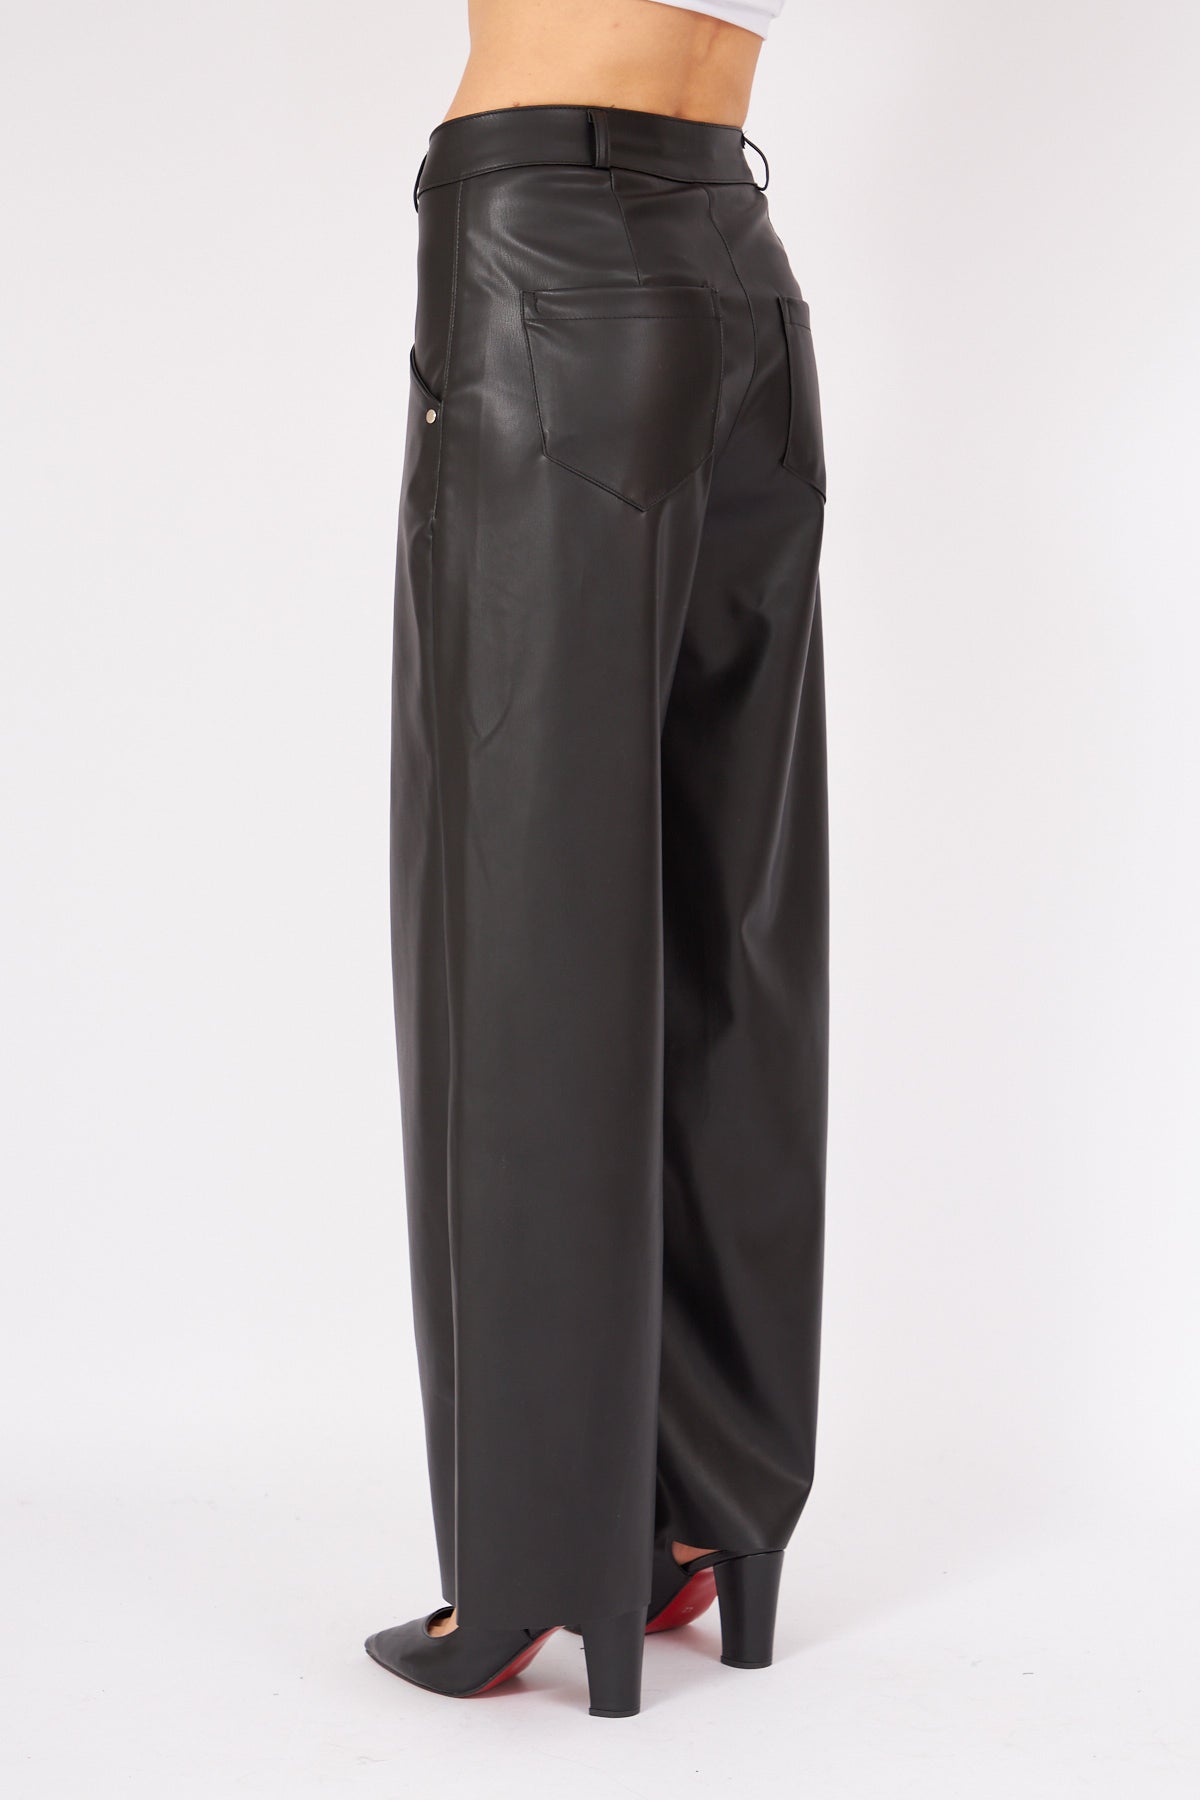 Black Leather Design Trousers - Lebbse